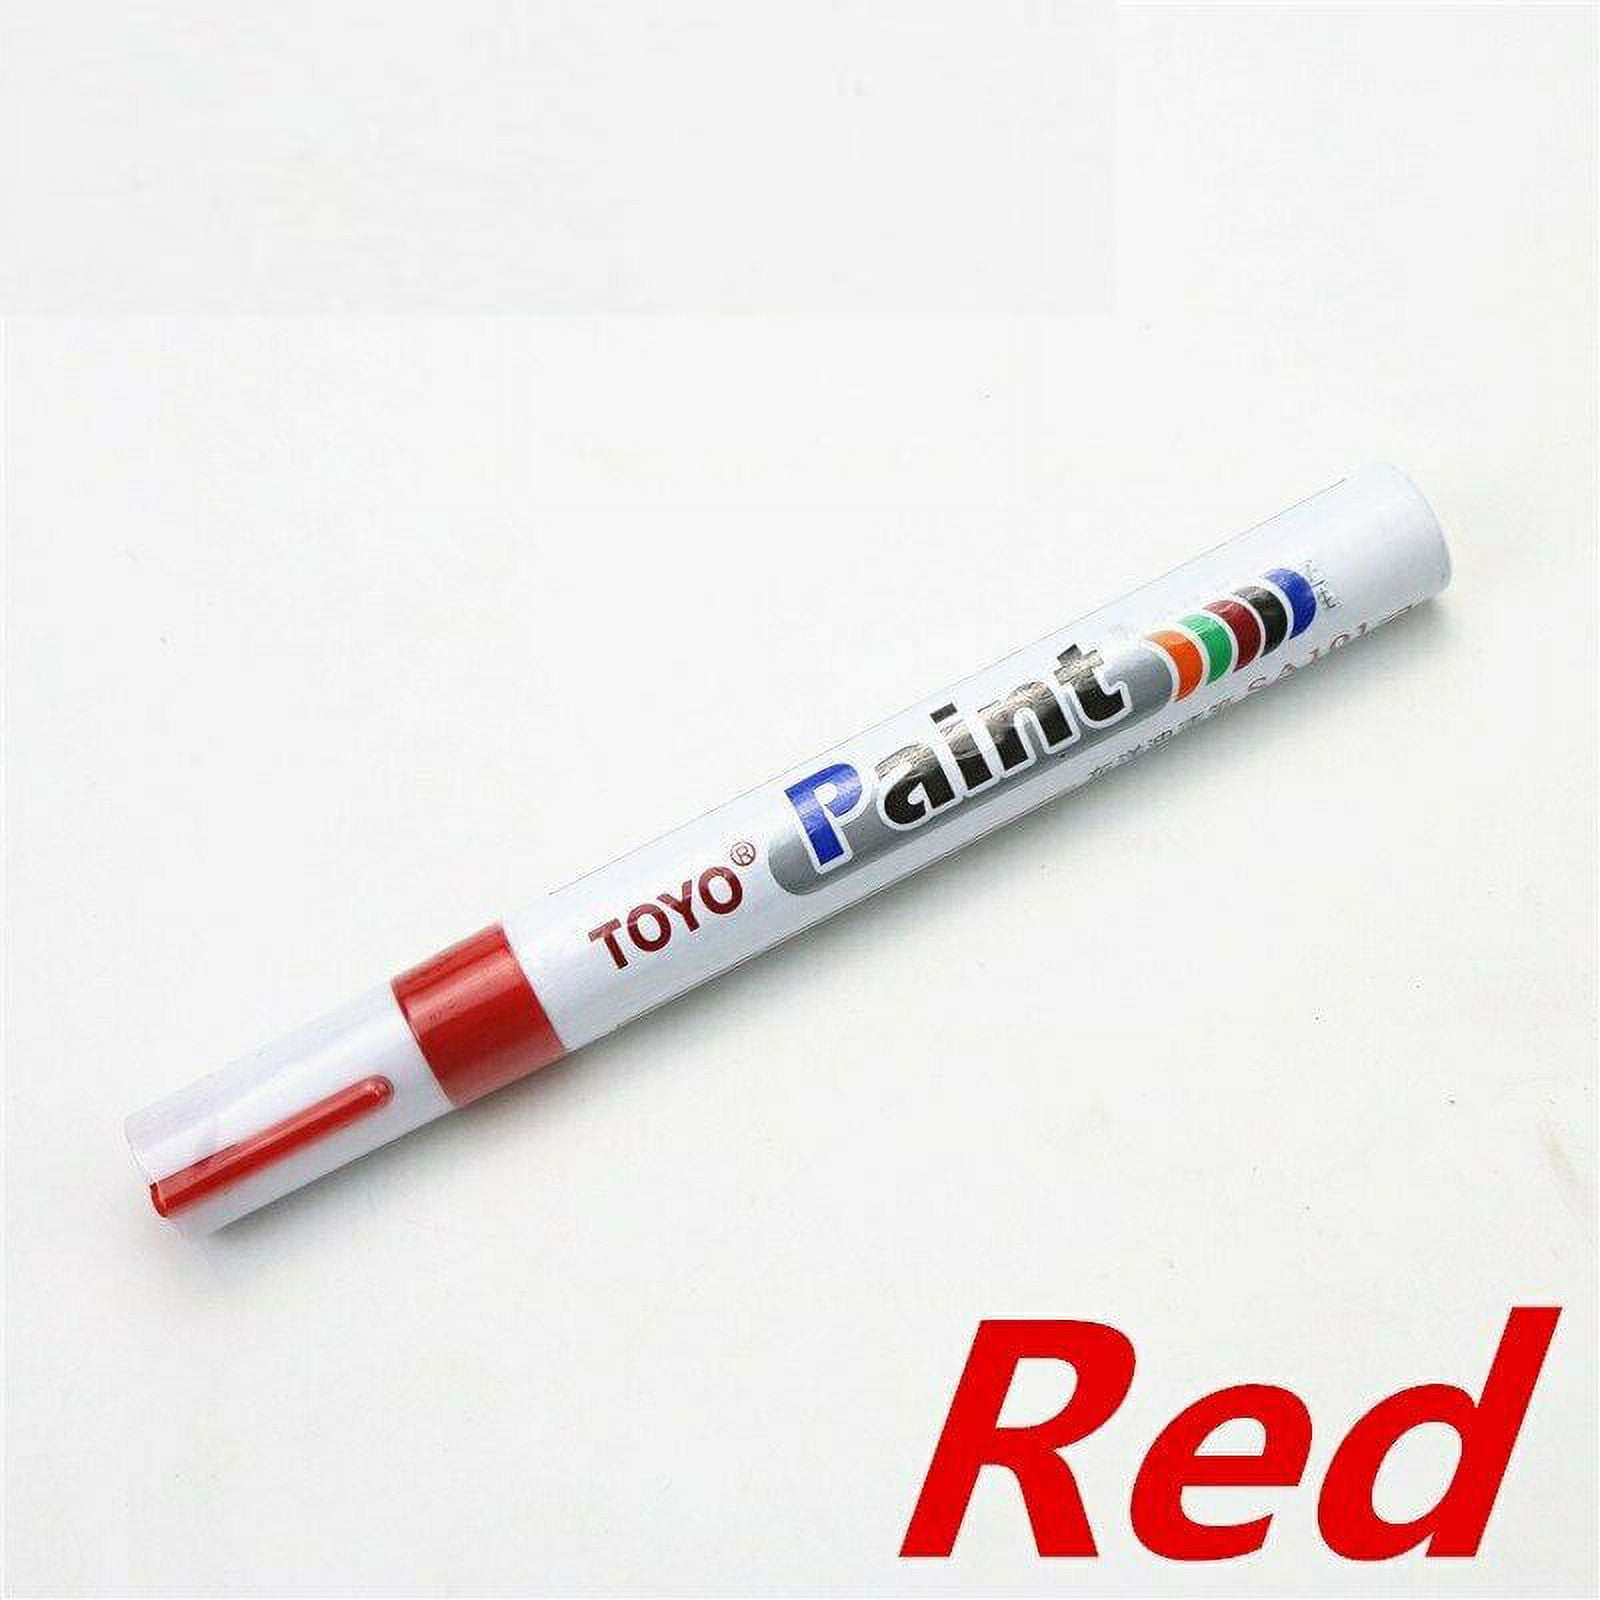 MoonyLI Acrylic Pens Marker Pens Waterproof Pens Metallic Markers Pens  Permanent Markers Non-Toxic